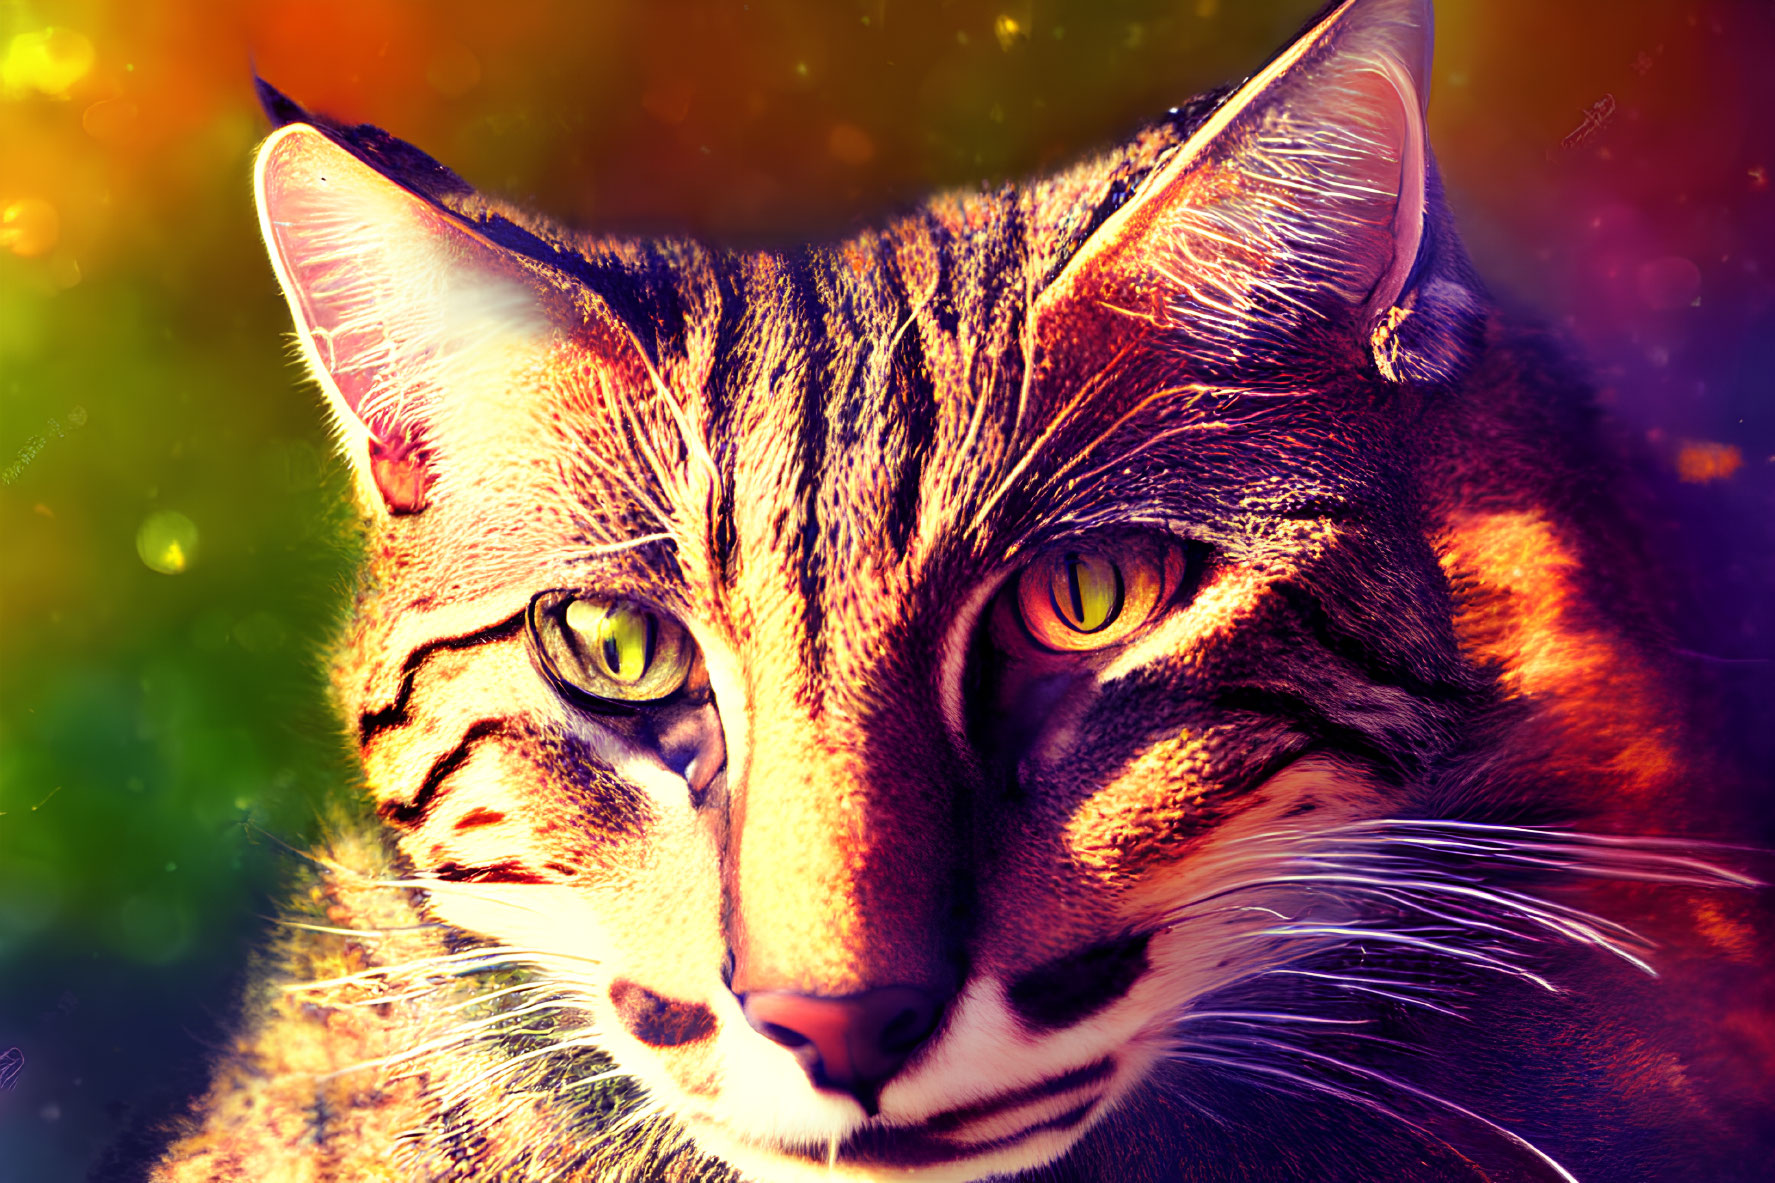 Close-Up Digital Art: Vivid Multicolored Lighting Enhances Cat's Striped Fur & Green